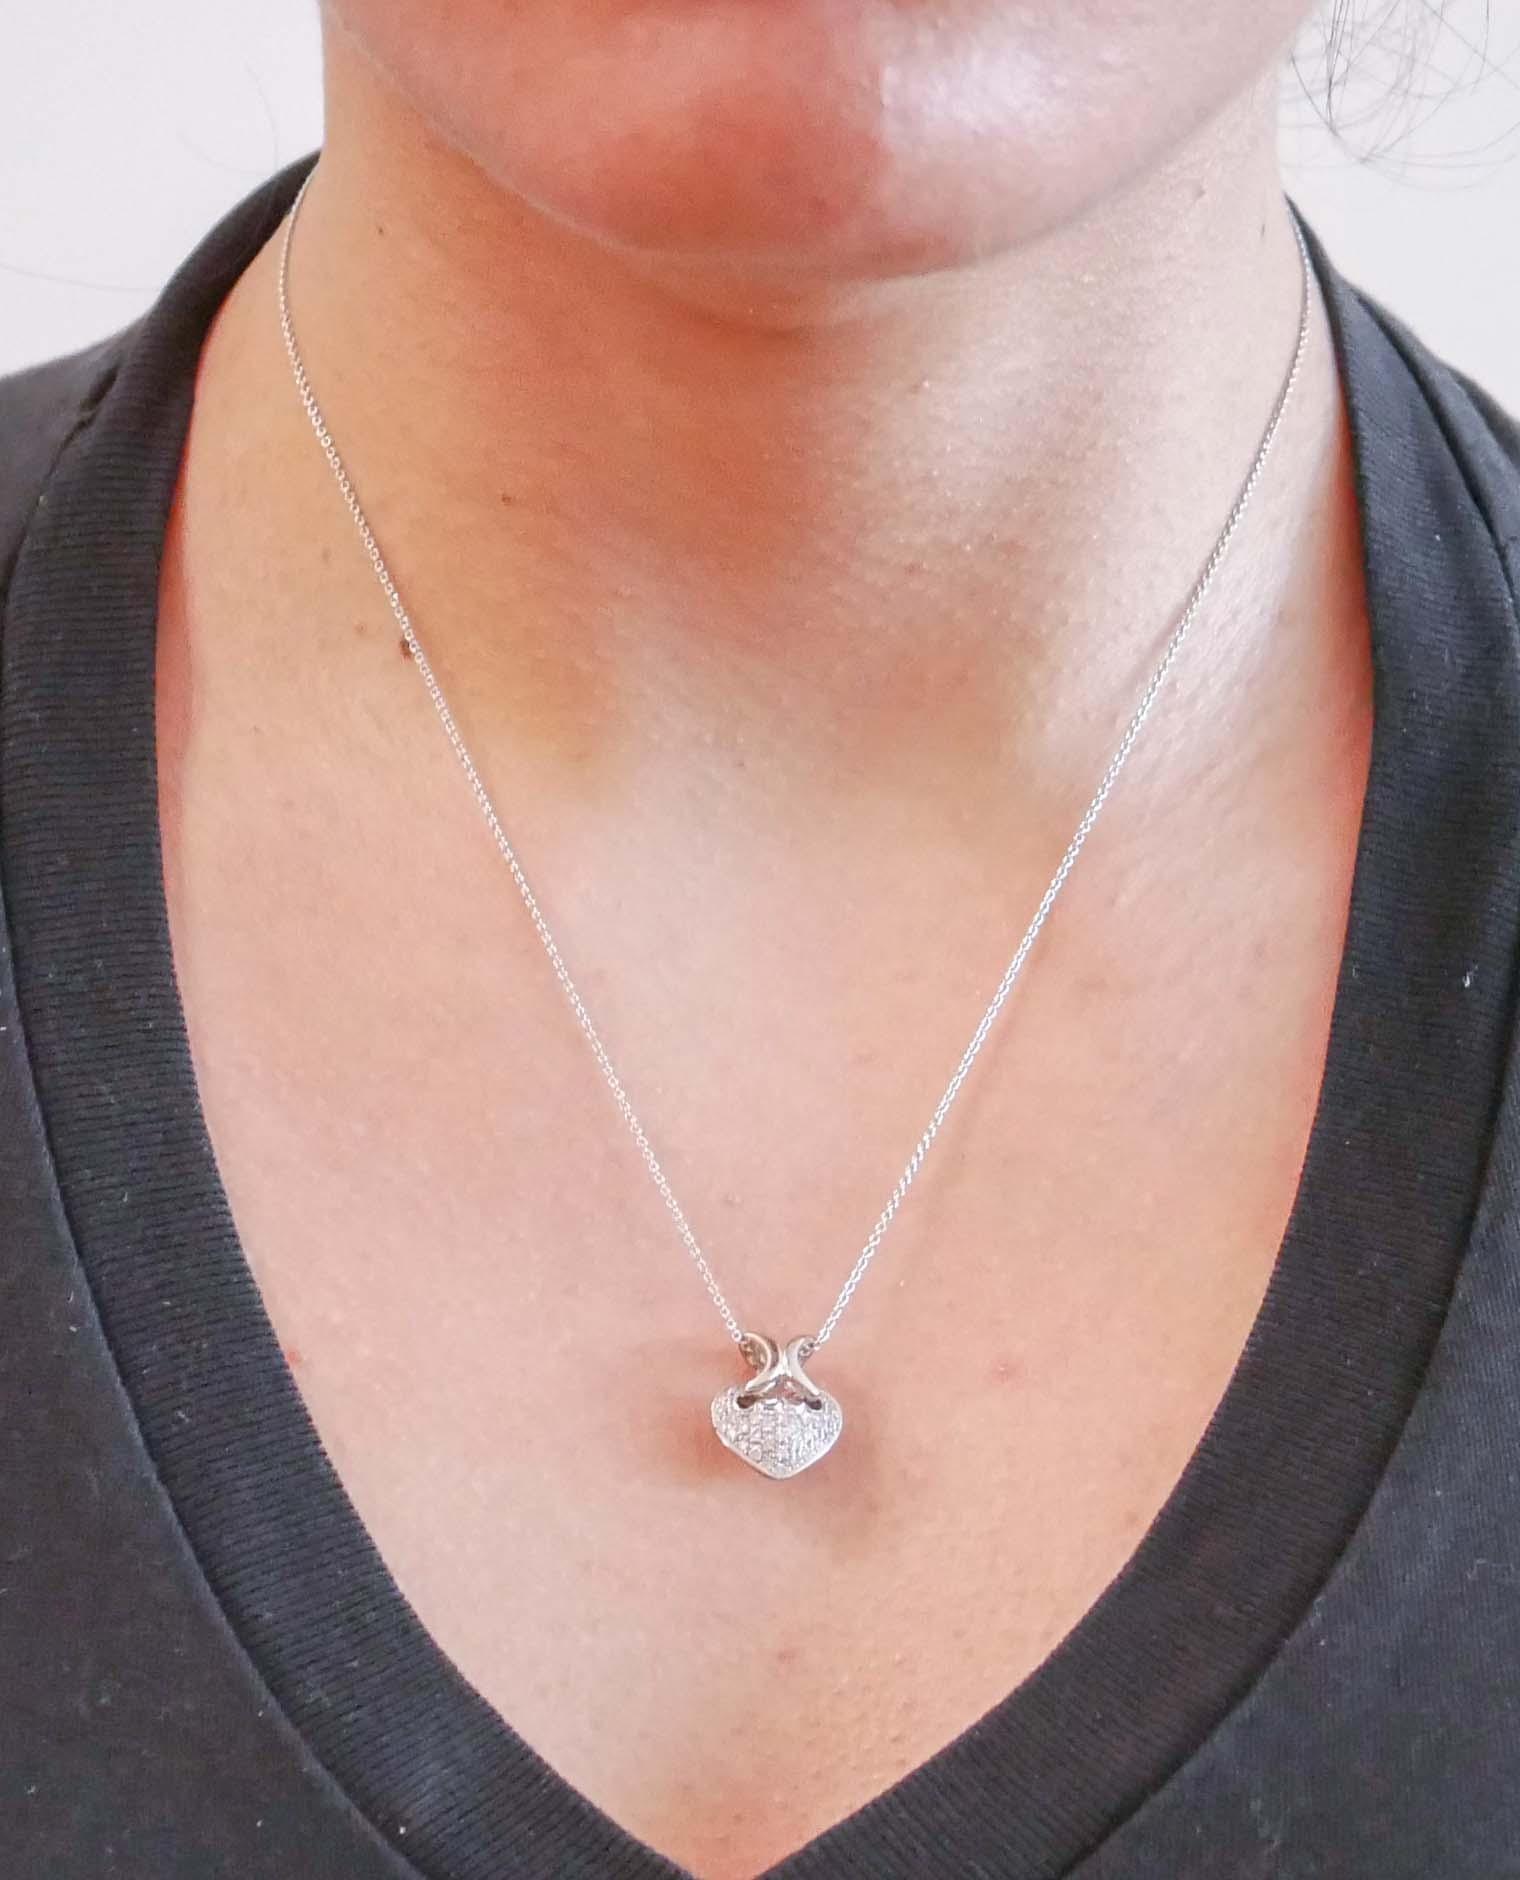 Women's Diamonds, 18 Karat White Gold Heart Pendant Necklace. For Sale